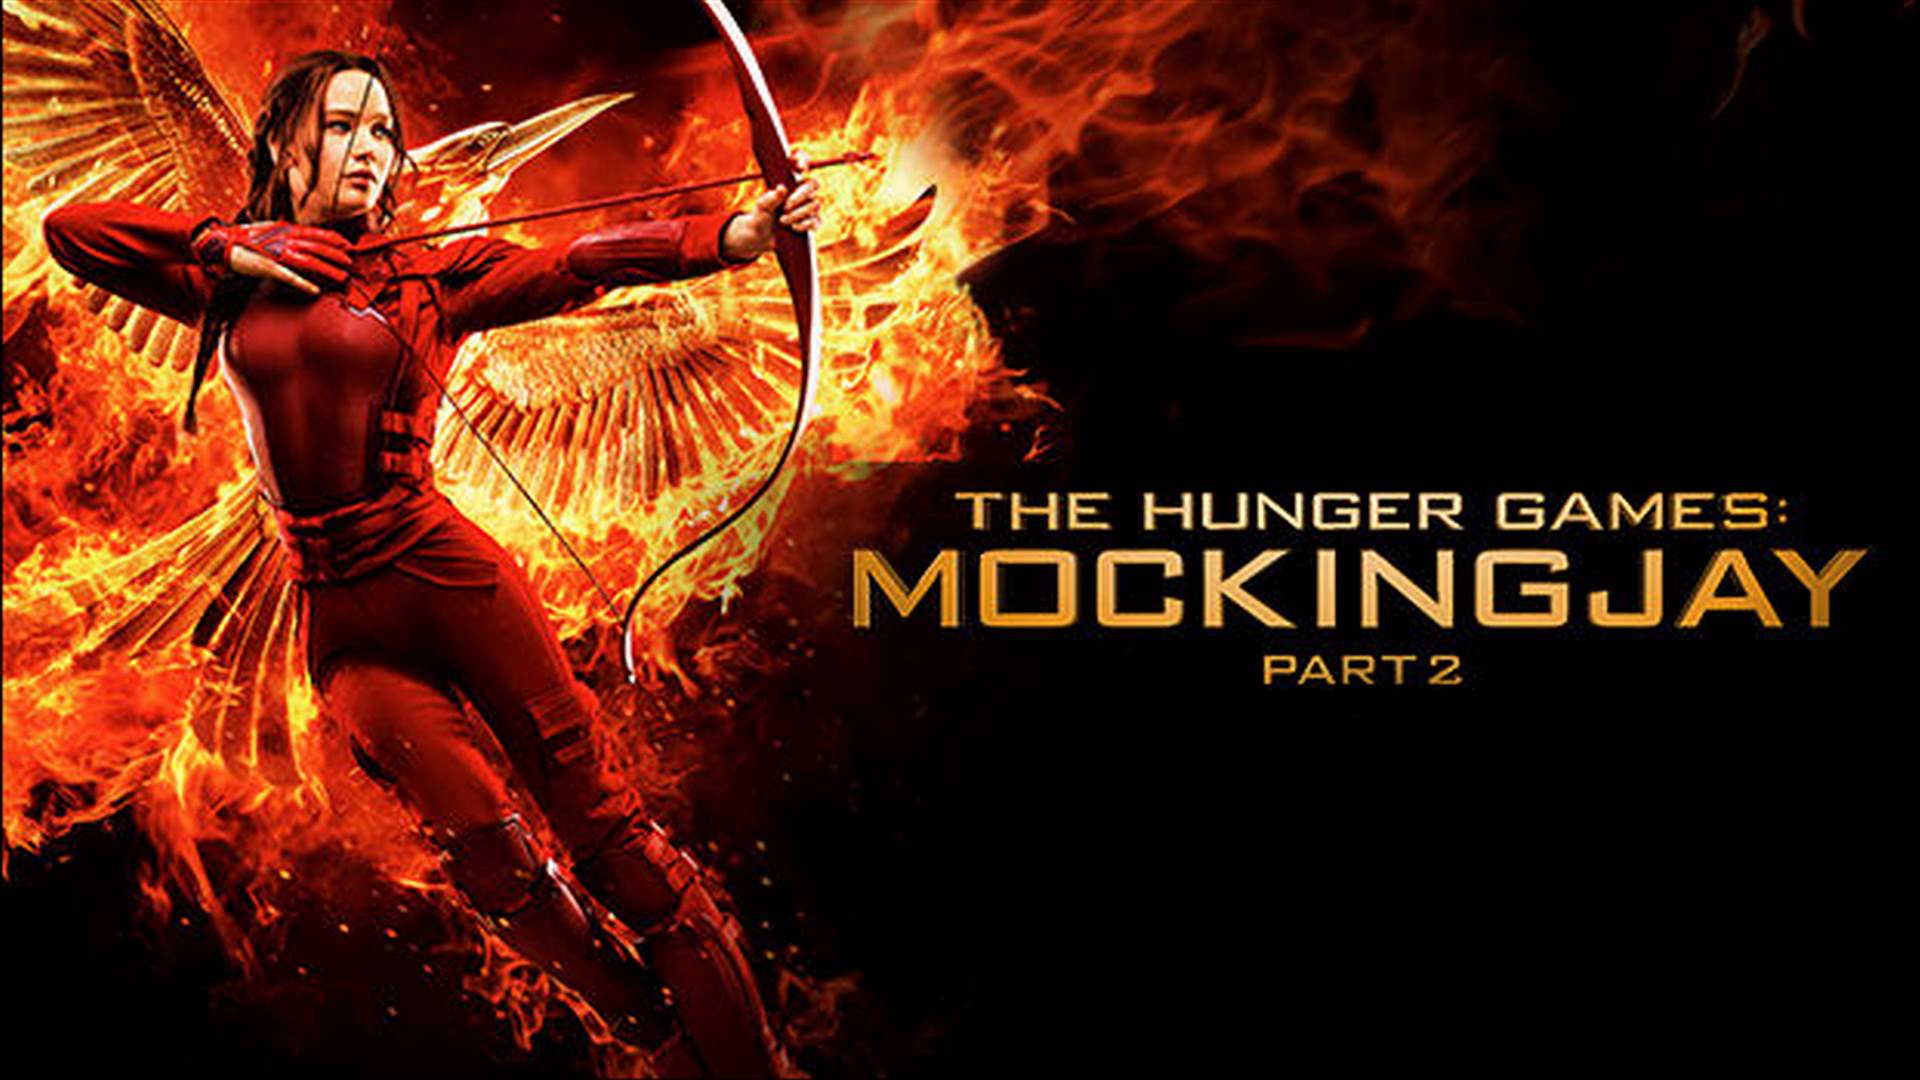 Movies The Hunger Games Mockingjay wallpaper Desktop, Phone